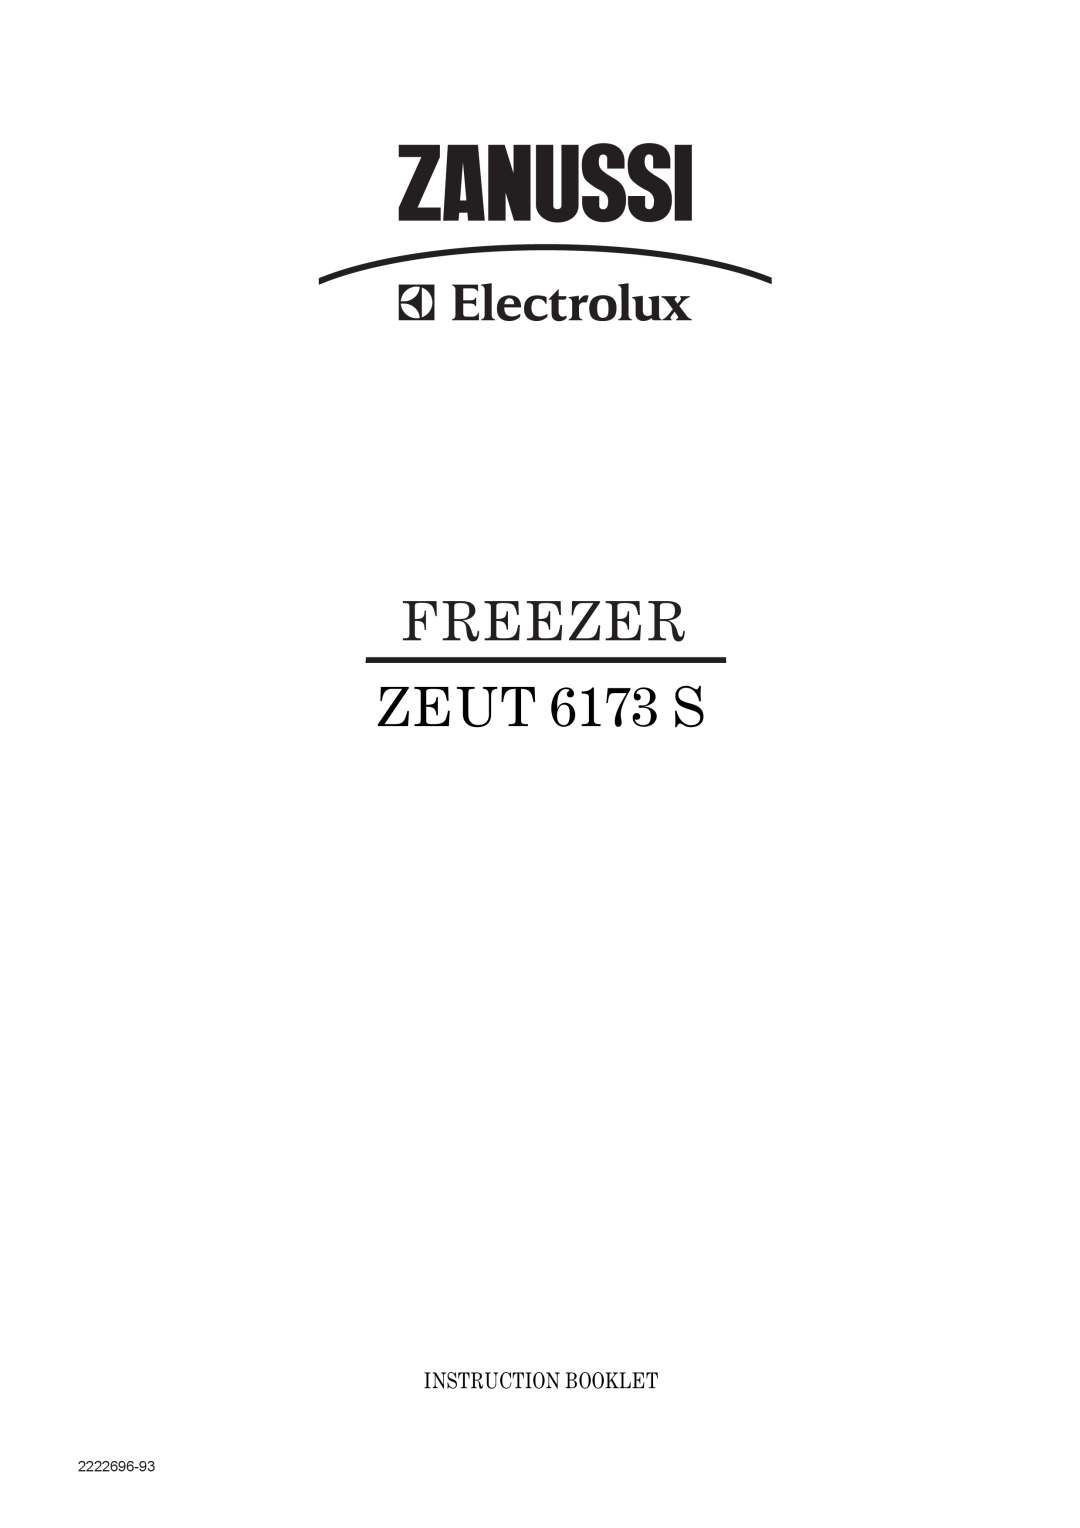 Zanussi manual FREEZER ZEUT 6173 S, Instruction Booklet, 2222696-93 